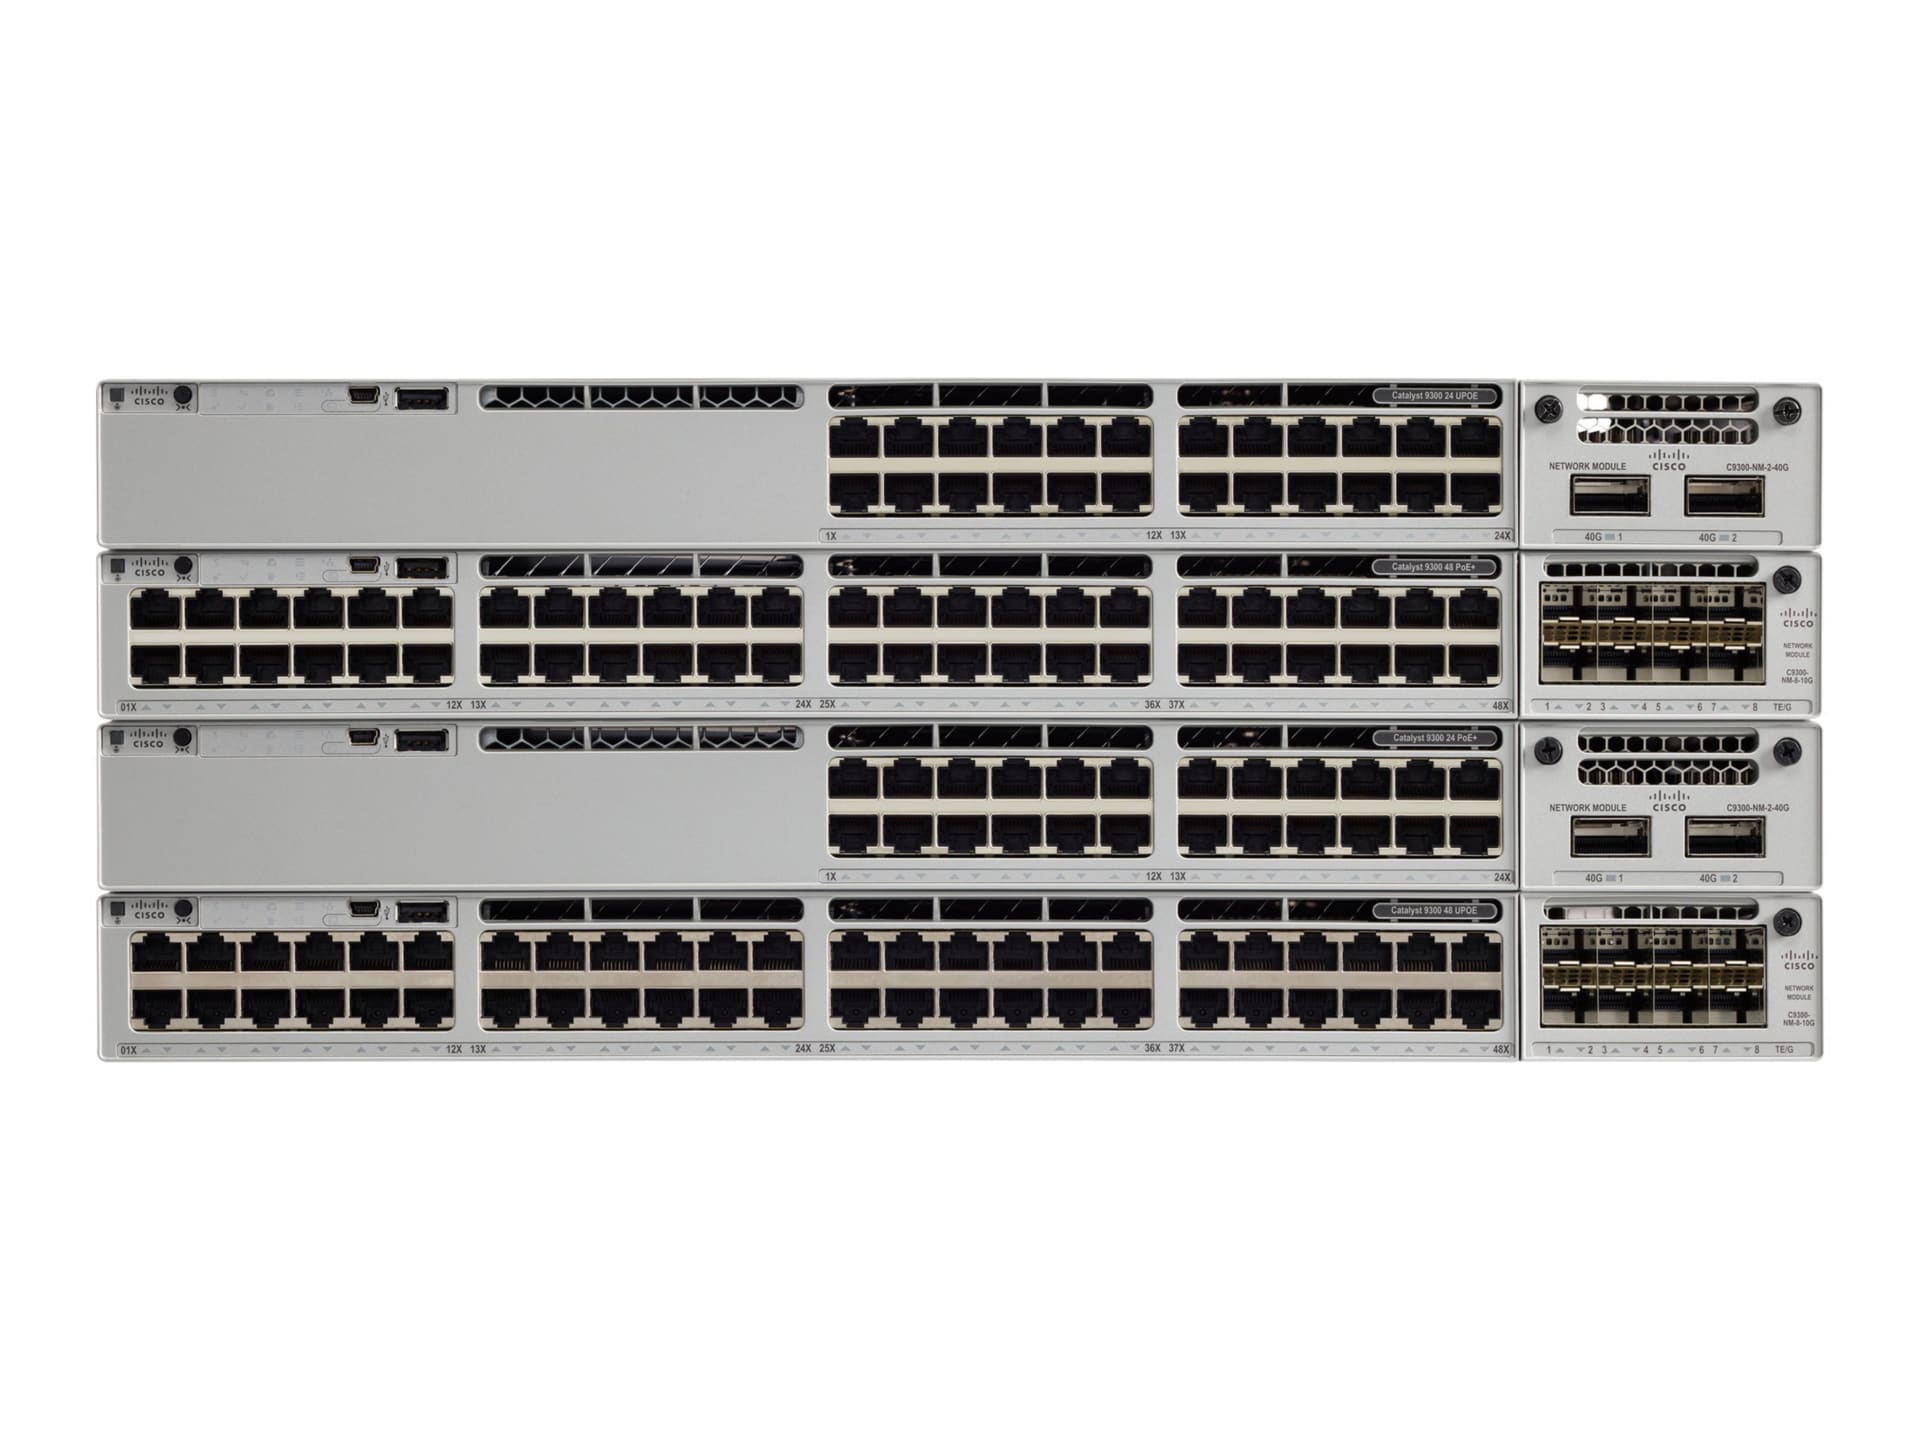 Cisco Catalyst 9300 - Network Advantage - switch - 48 ports - managed - rac